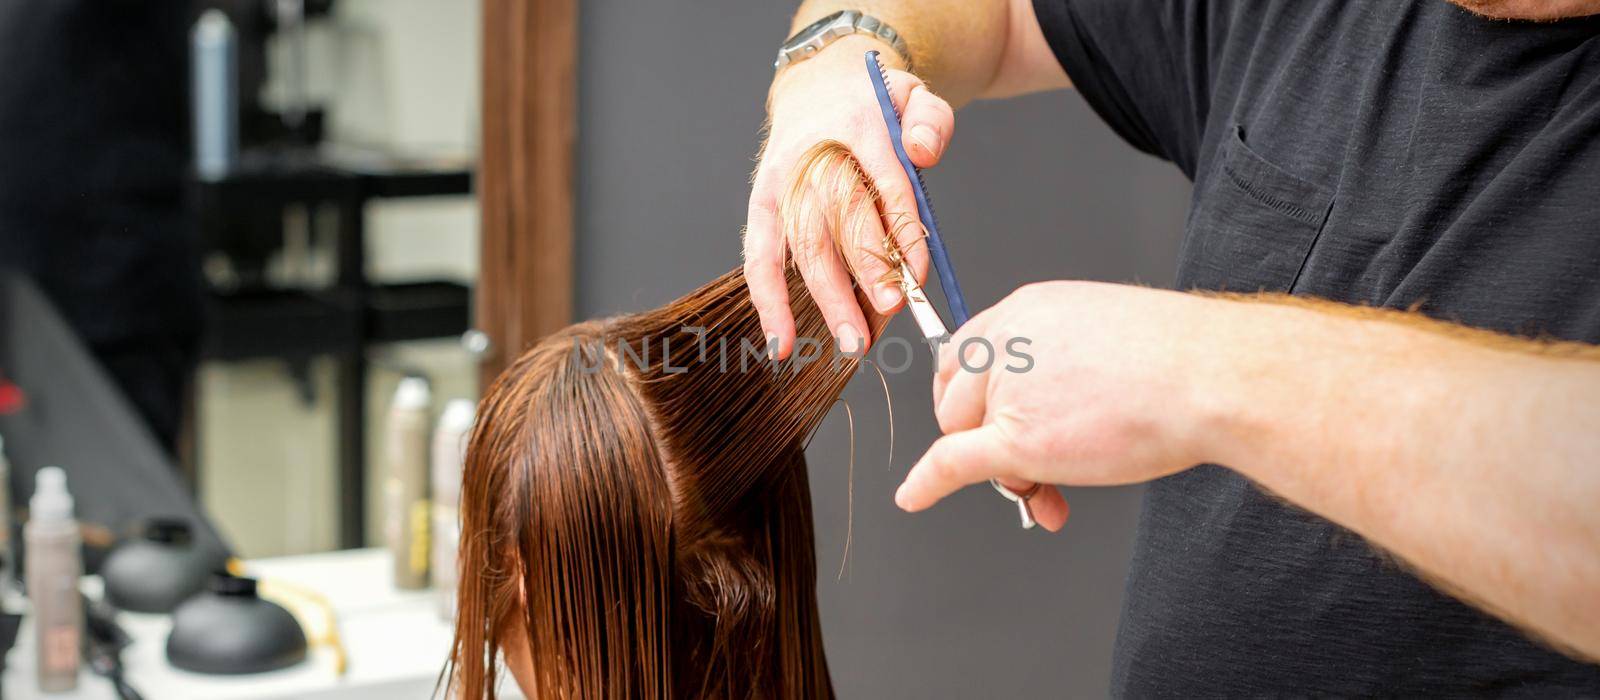 Woman having a new haircut. Male hairstylist cutting brown hair with scissors in a hair salon. by okskukuruza